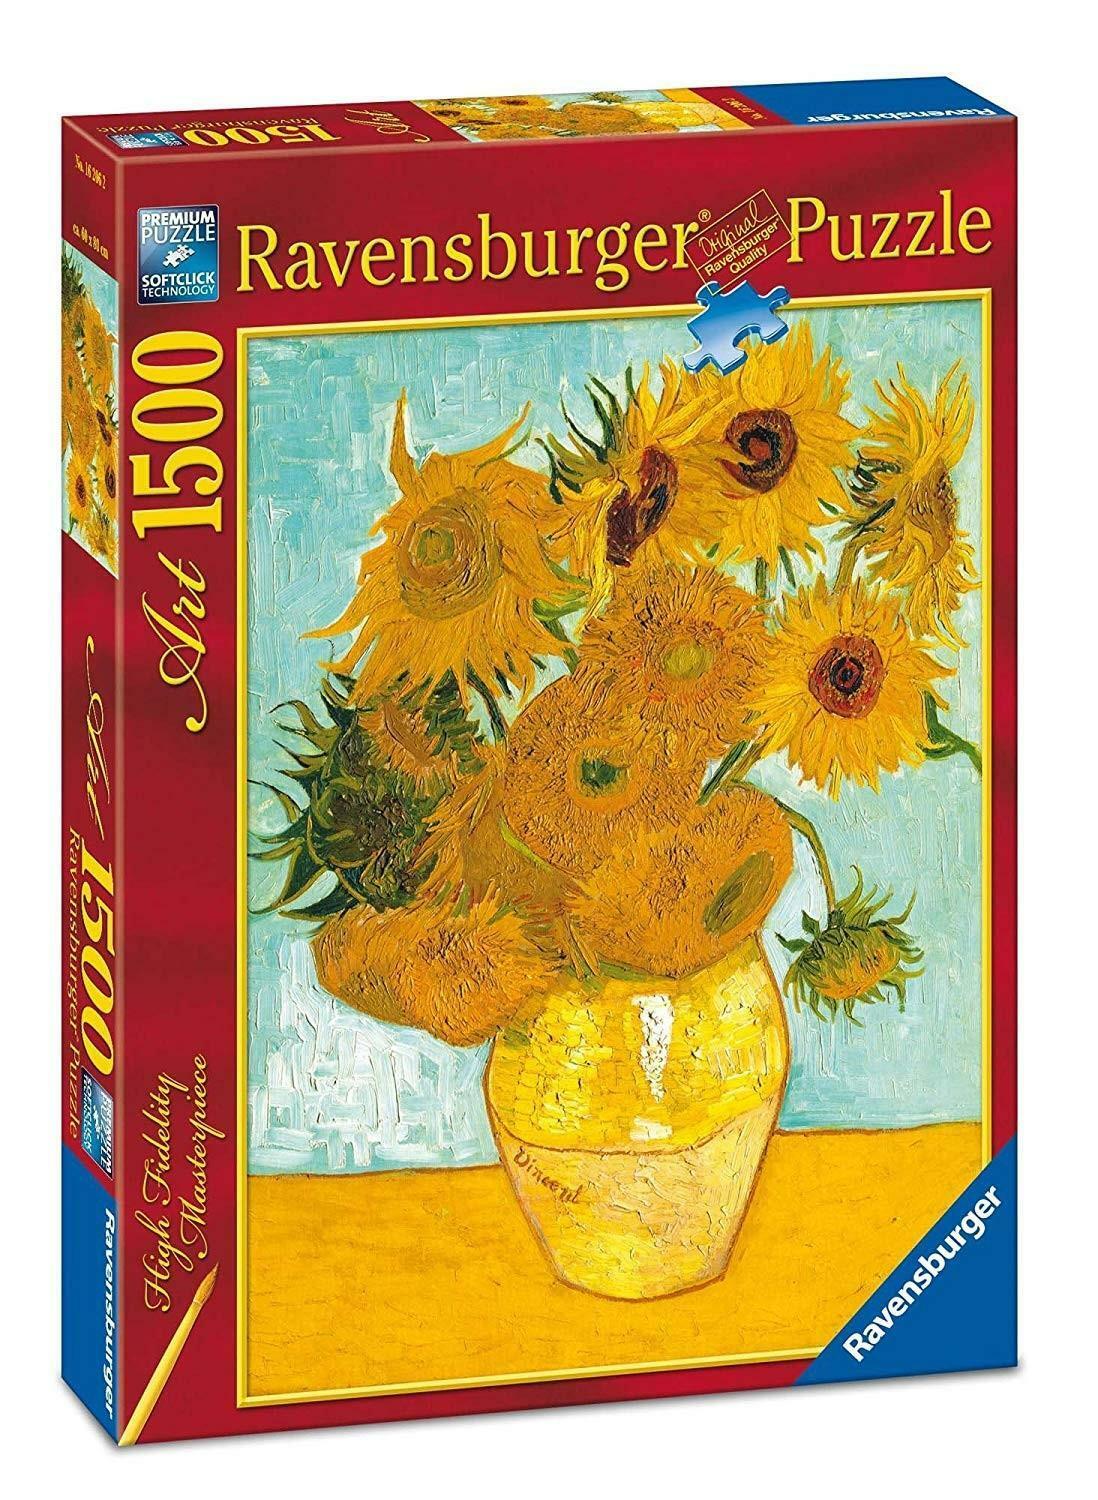 ravensburger ravensburger puzzle 1500 pz - vaso con girasoli